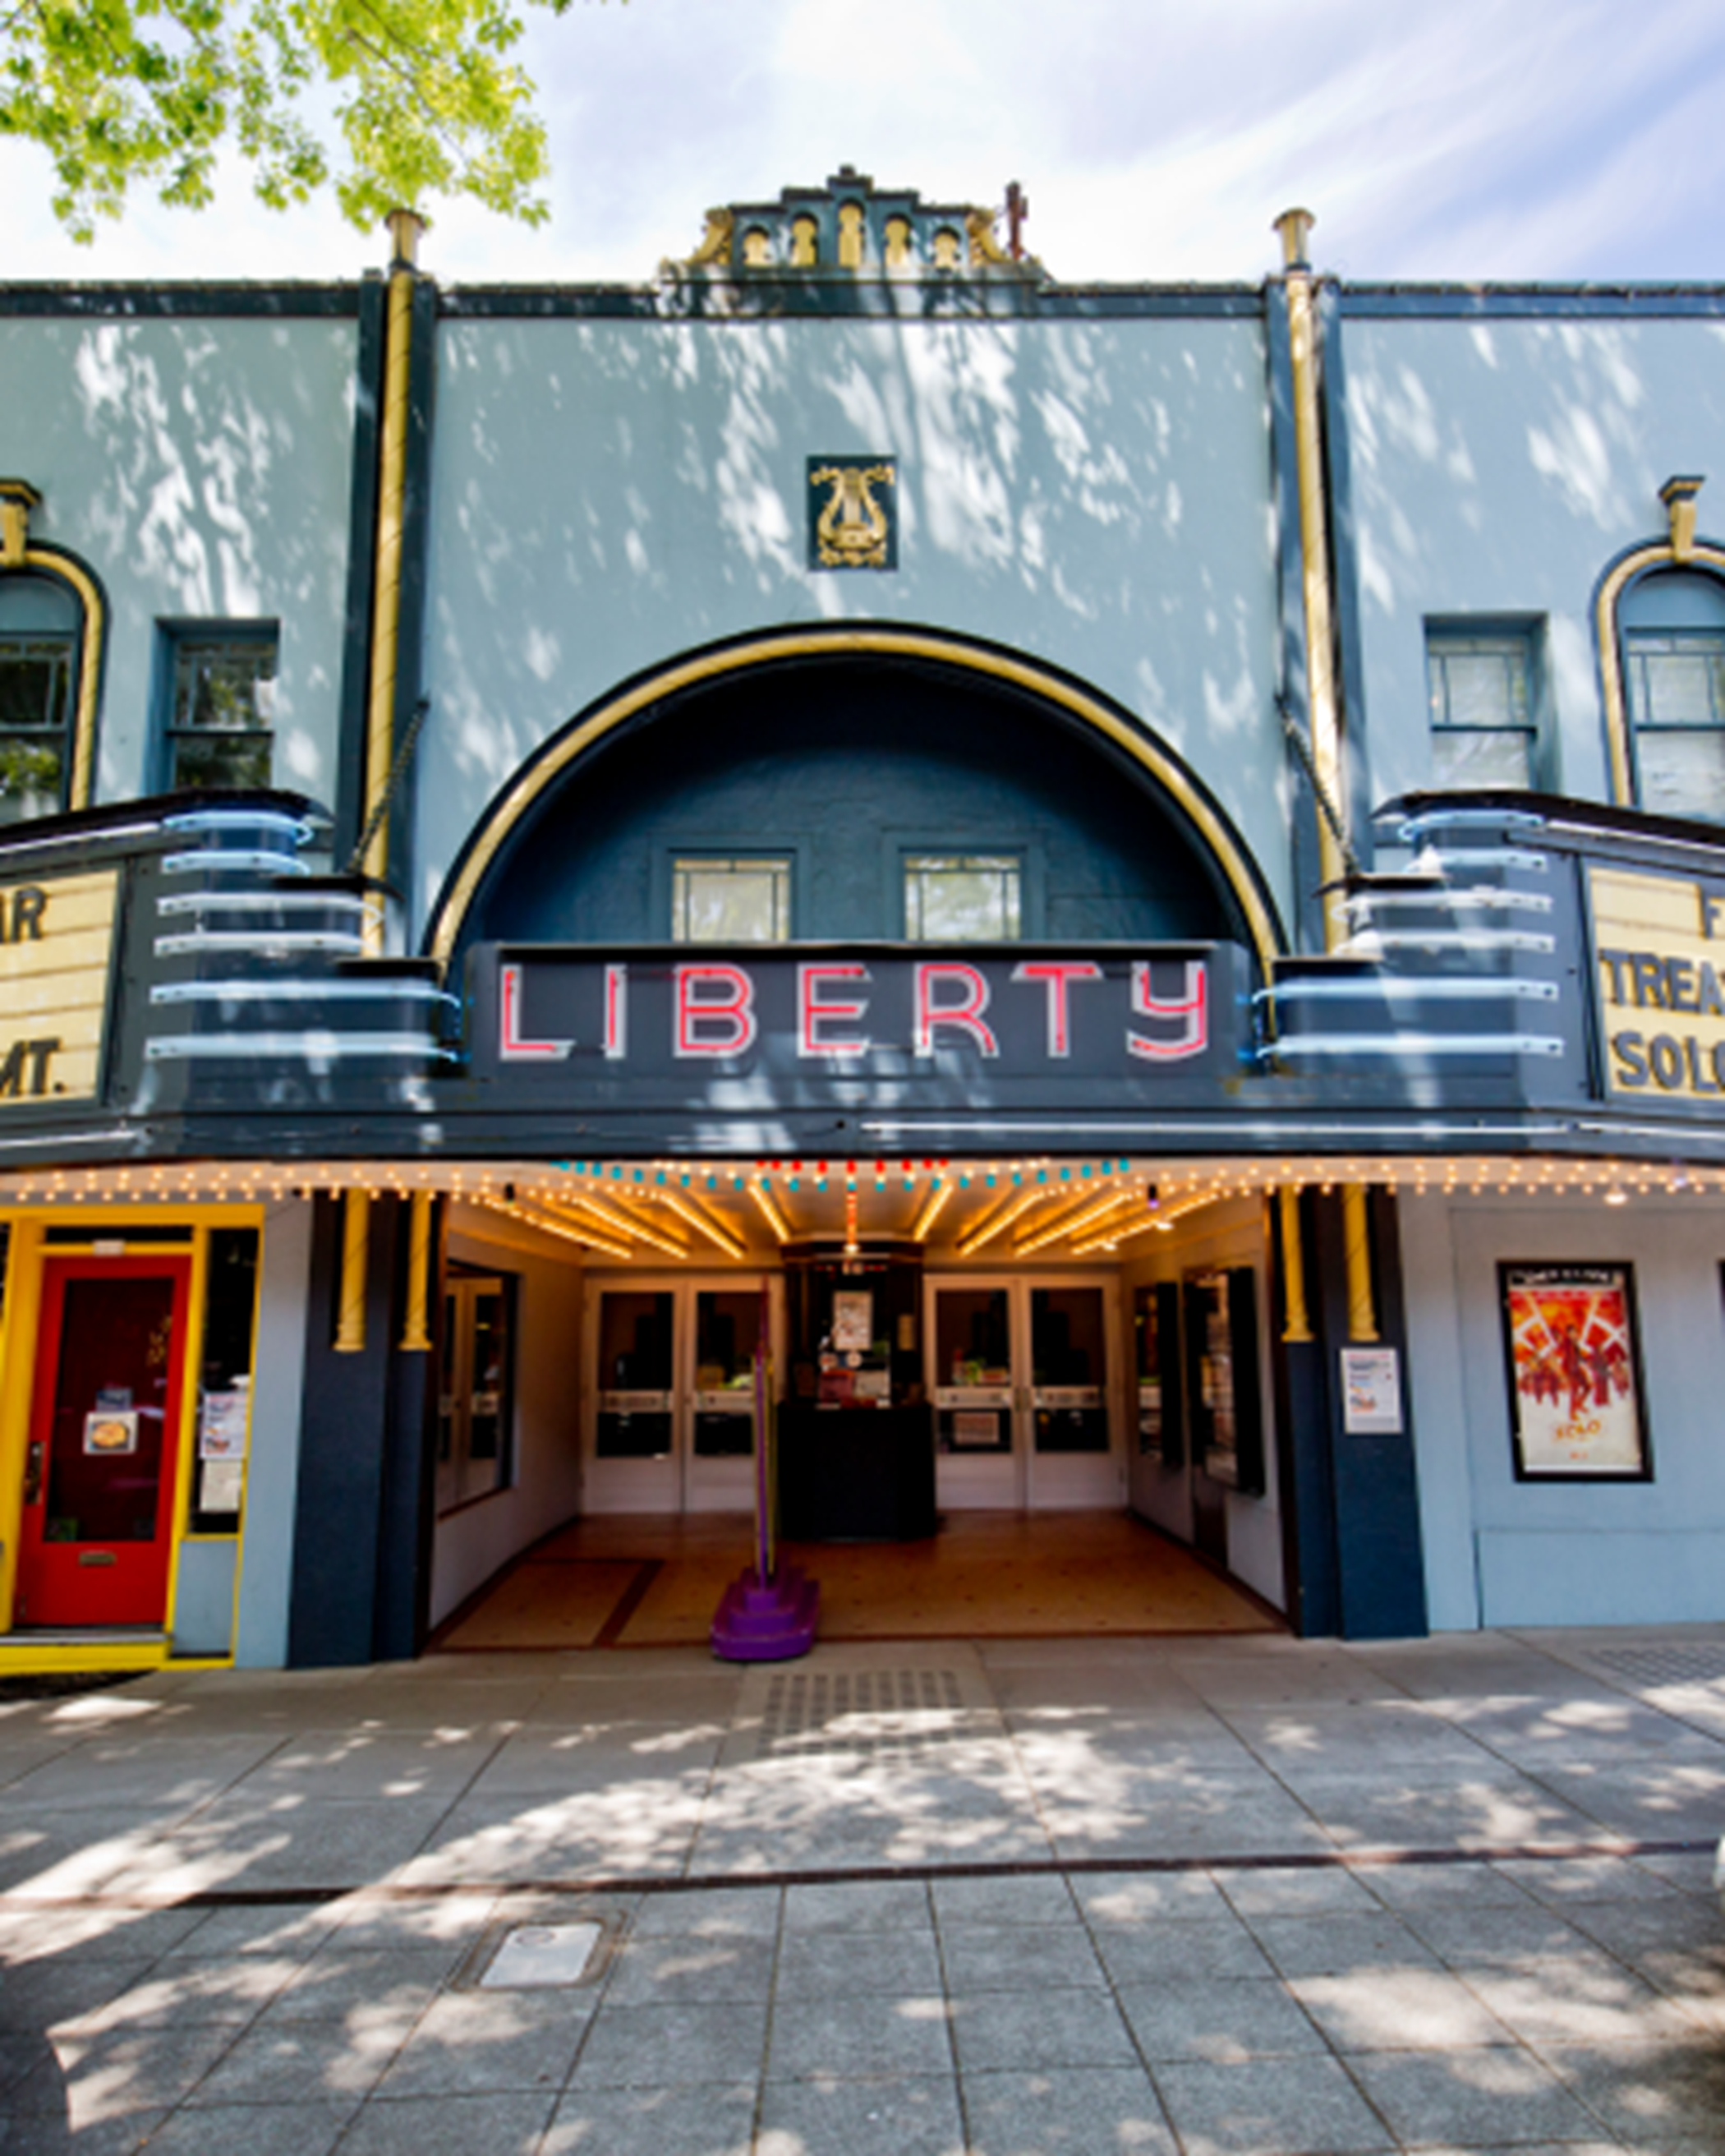 Liberty Theater in Camas Washington